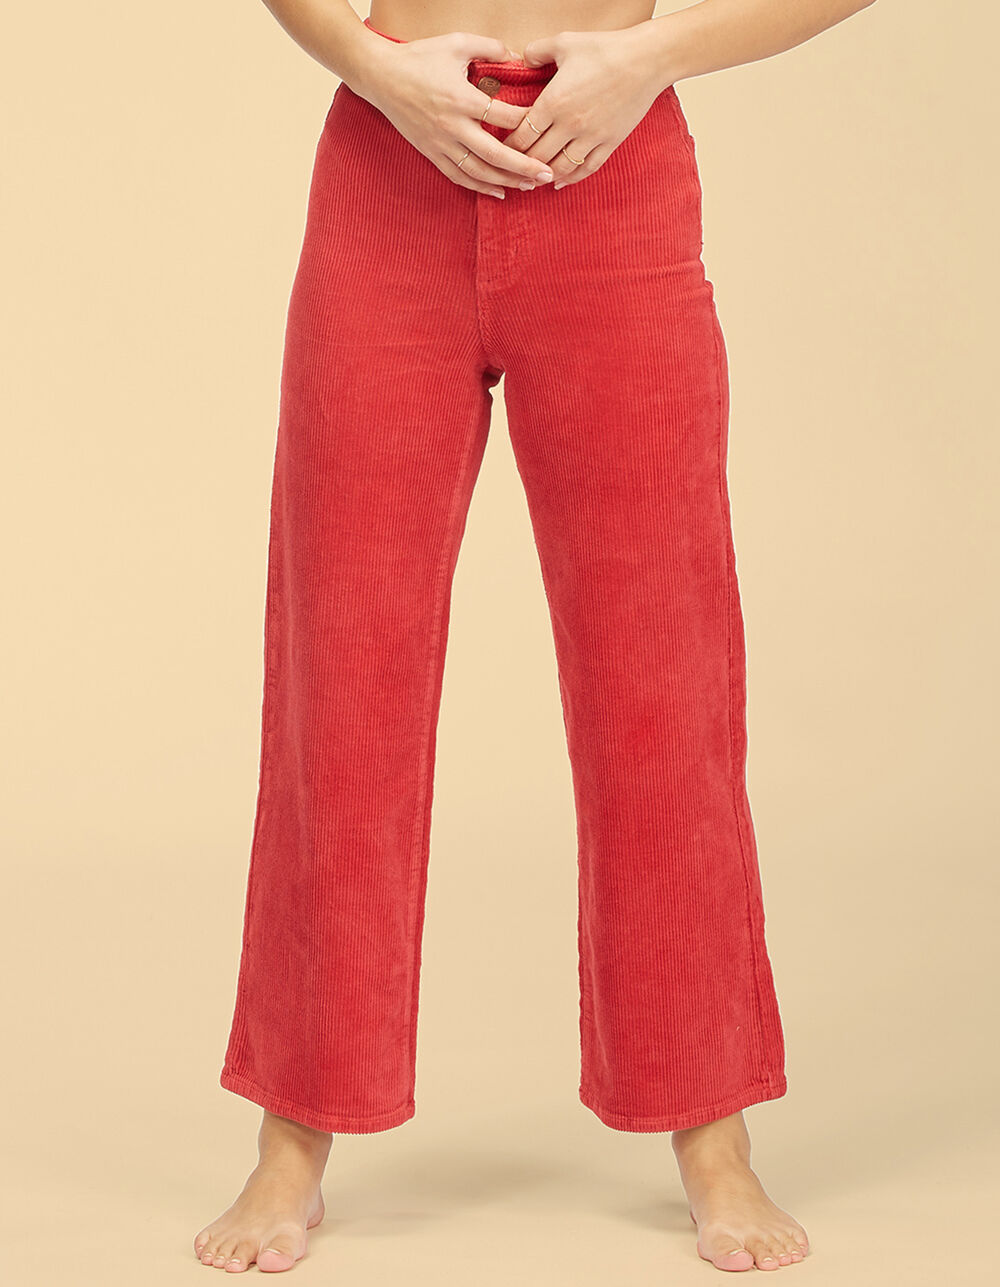 BILLABONG x Wrangler The Retro Womens Red Corduroy Pants - RED | Tillys